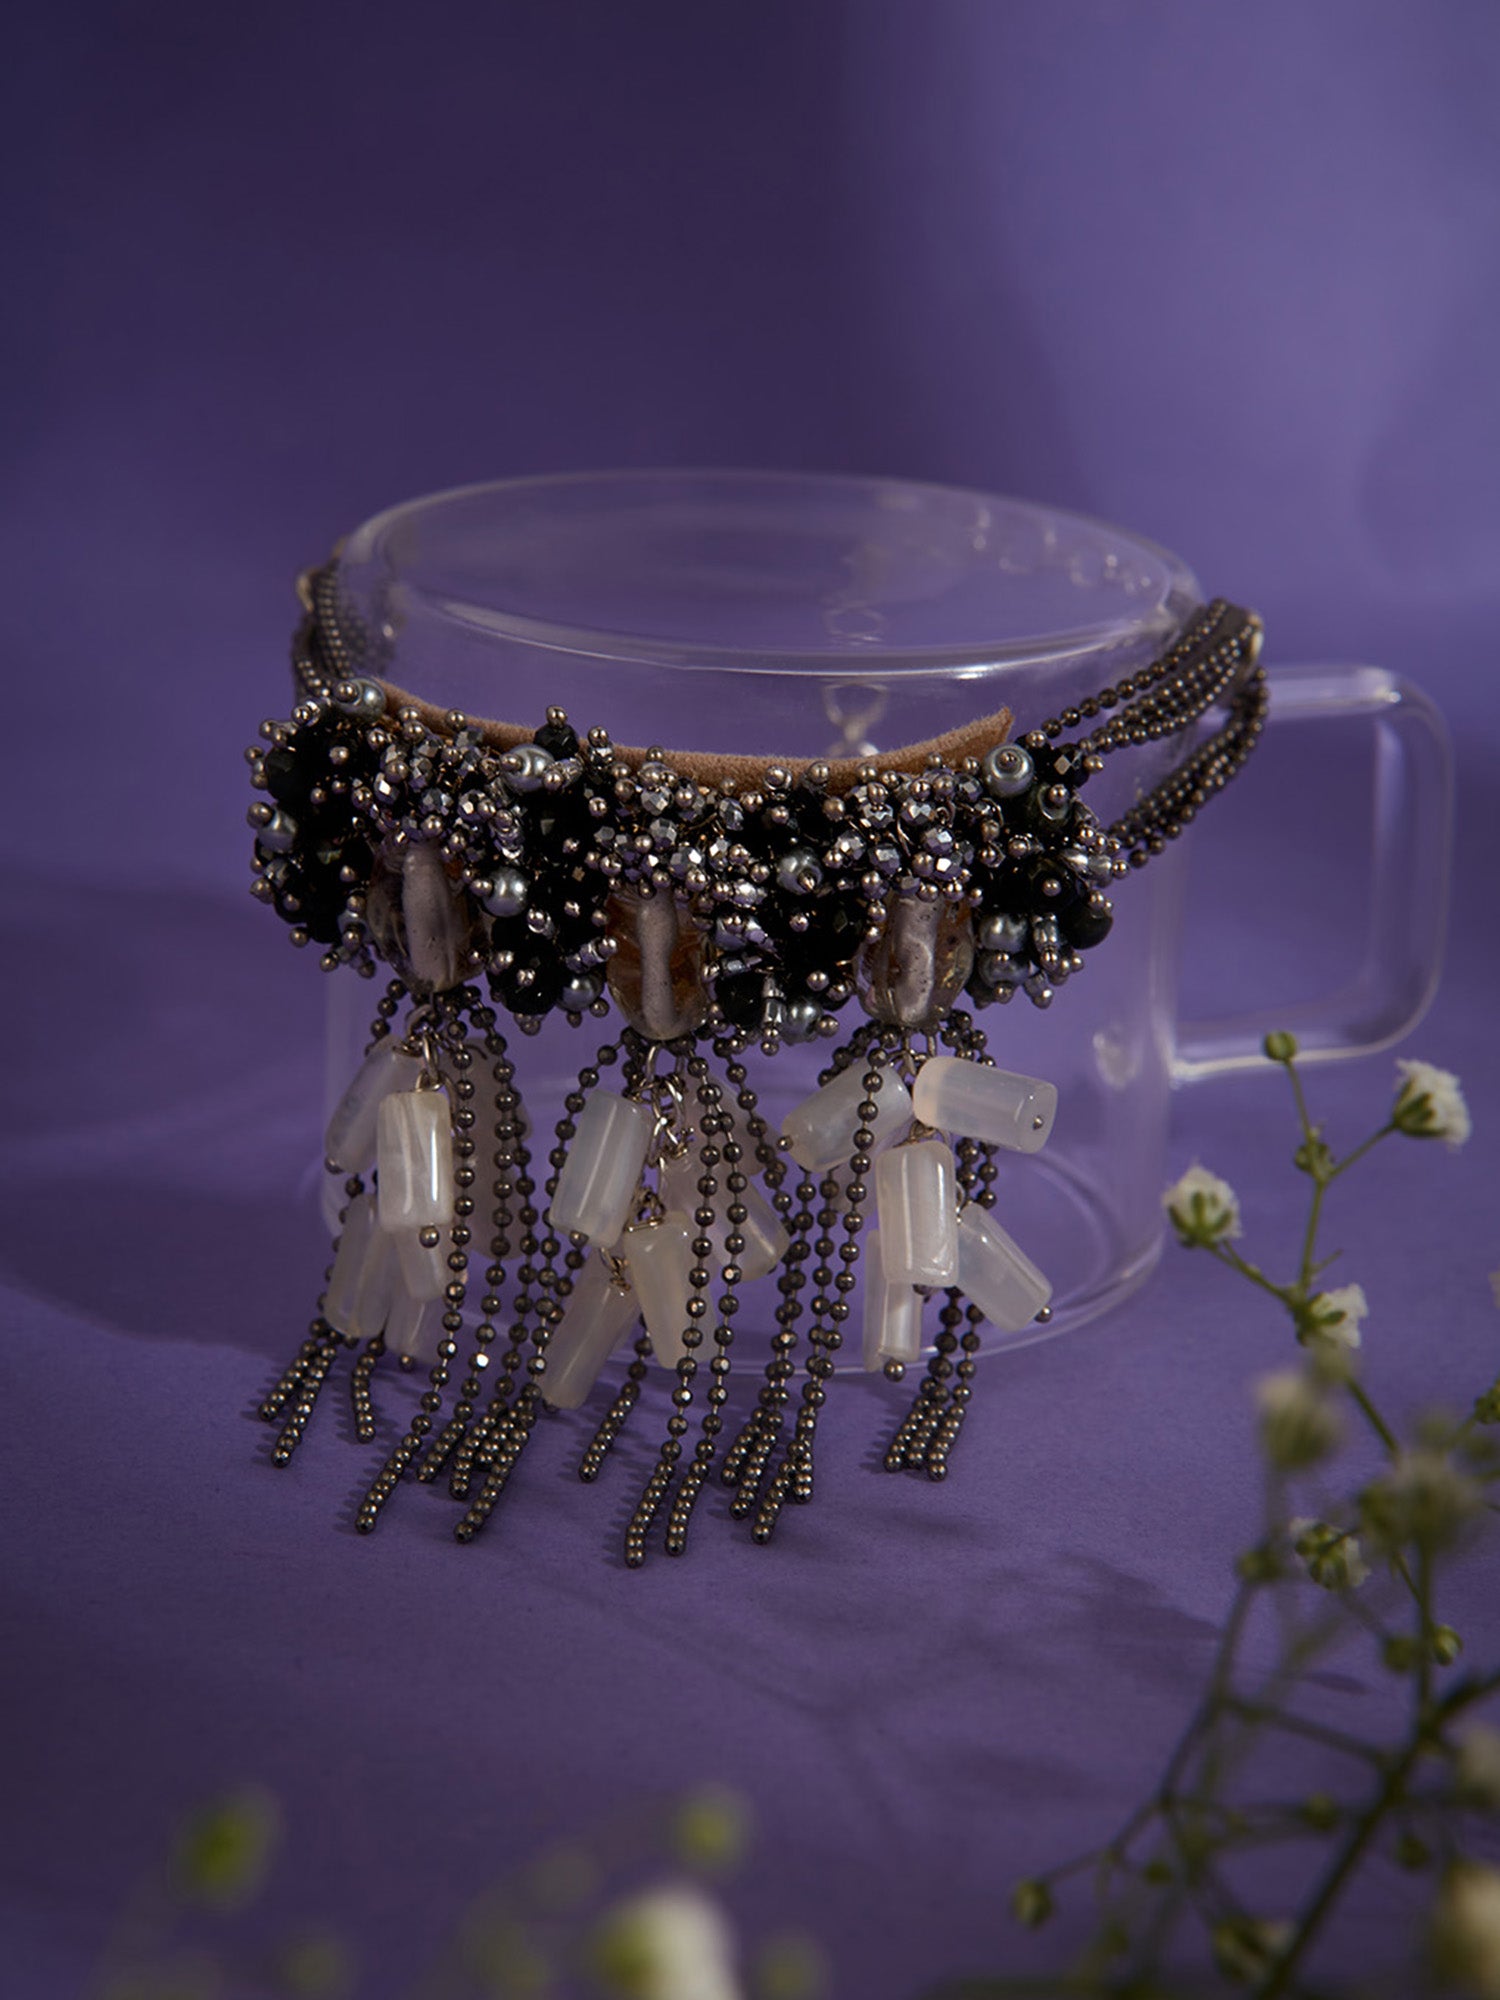 Amama,Designer Bracelet With Black And Silver Stones